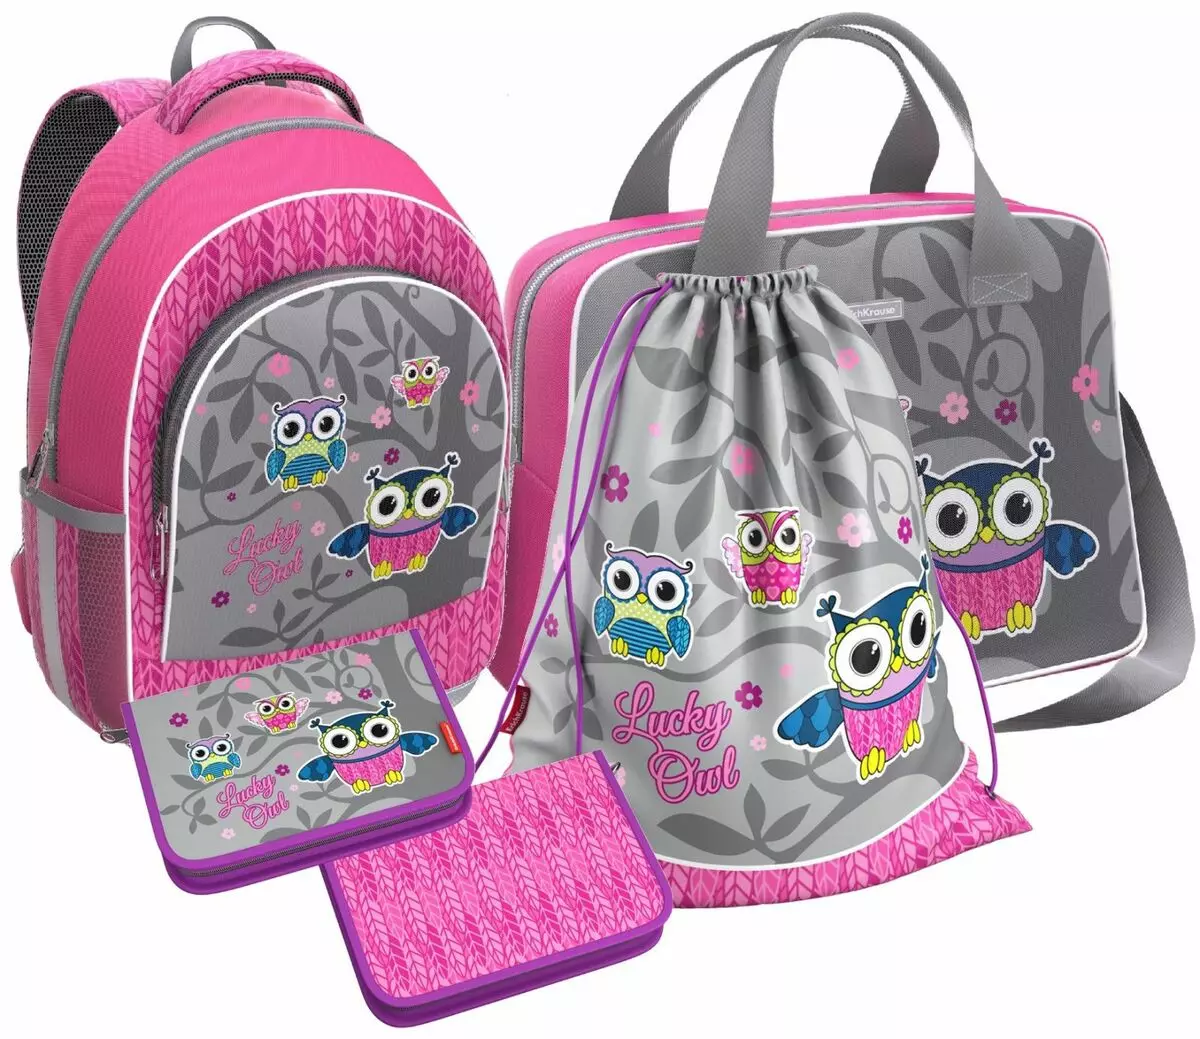 Backpacks ଏବଂ Erich Krause ପଦବାଚ୍ୟ: କାରଣ ବାଳିକା ବିଦ୍ୟାଳୟ backpacks ଏବଂ ପ୍ରଥମ-graders ବାଳକମାନଙ୍କୁ, teens, ergonomic ପୁନଃ ଅନ୍ୟମାନଙ୍କ ସହିତ backpacks ପାଇଁ 15465_12